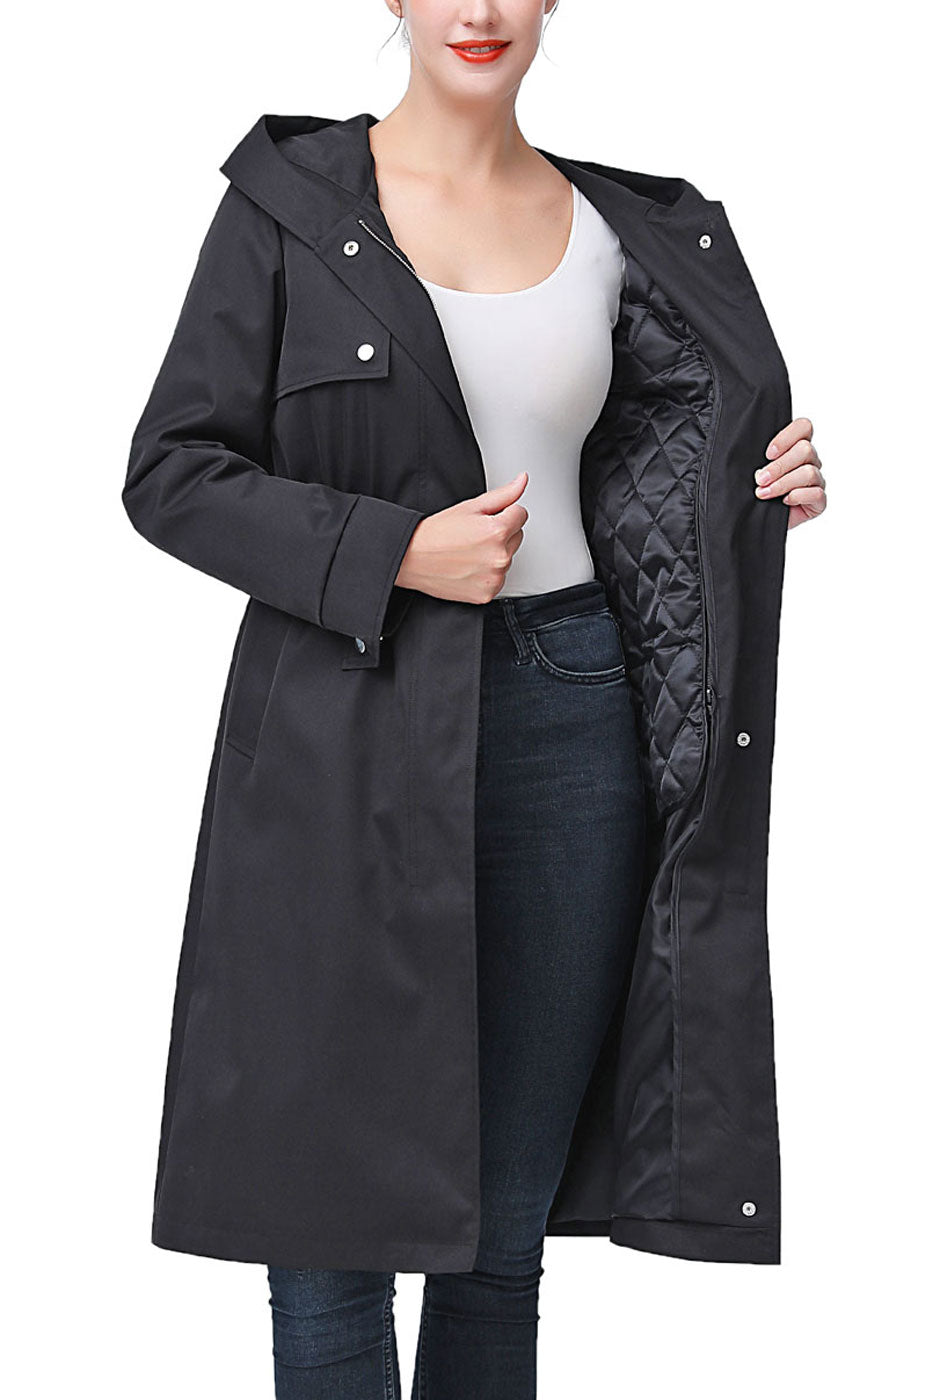 LONG ZIPPER COAT - black raincoat for women